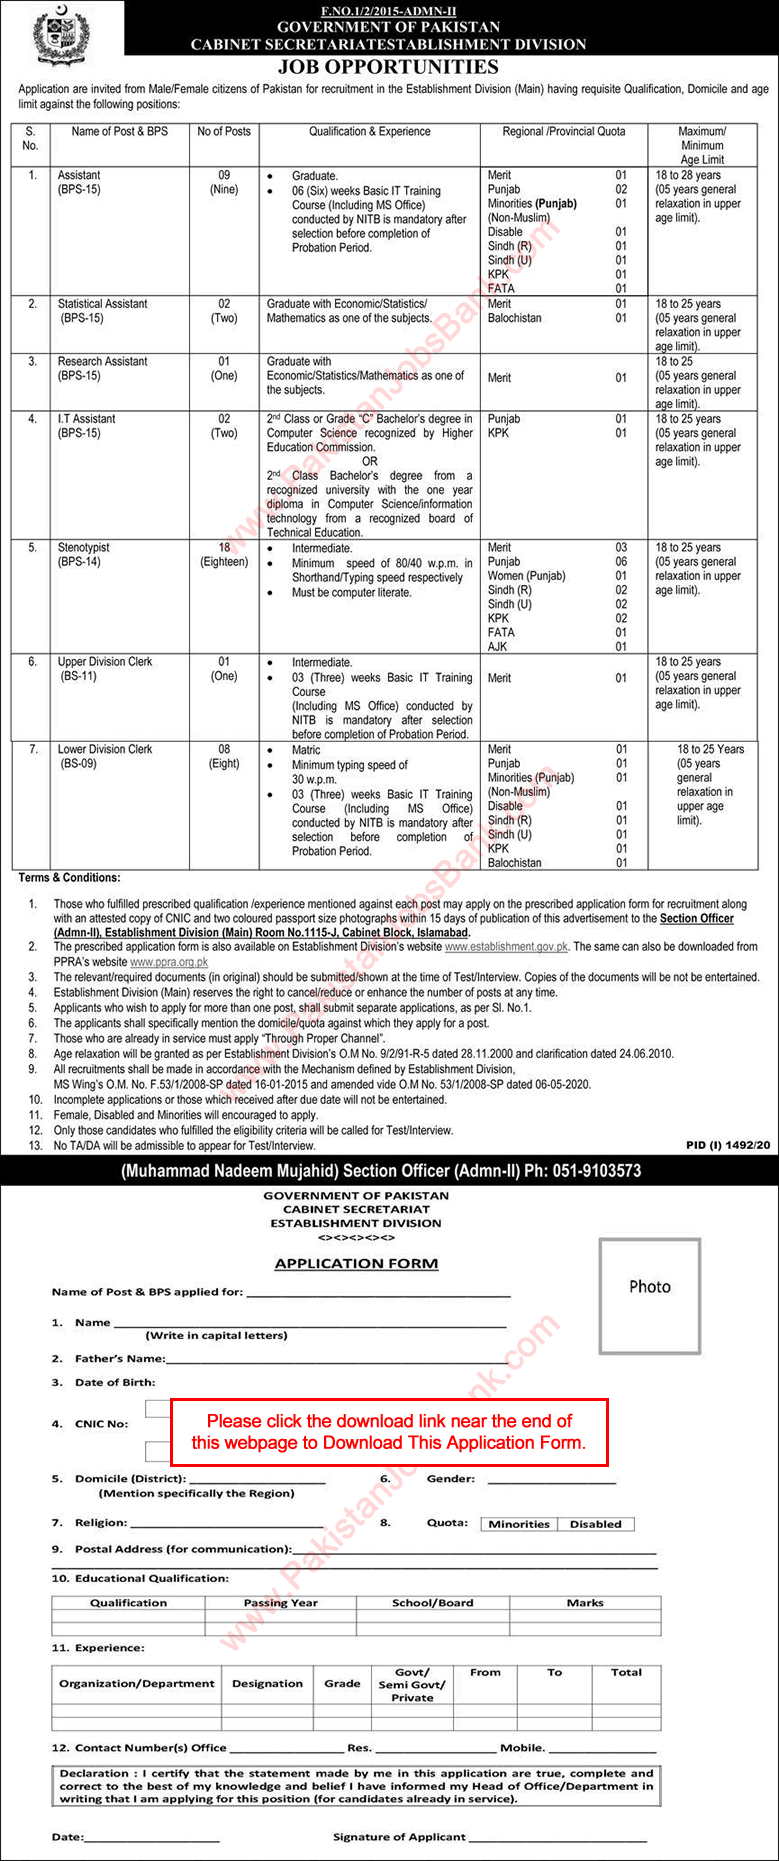 Cabinet Secretariat Establishment Division Islamabad Jobs September 2020 Application Form Latest